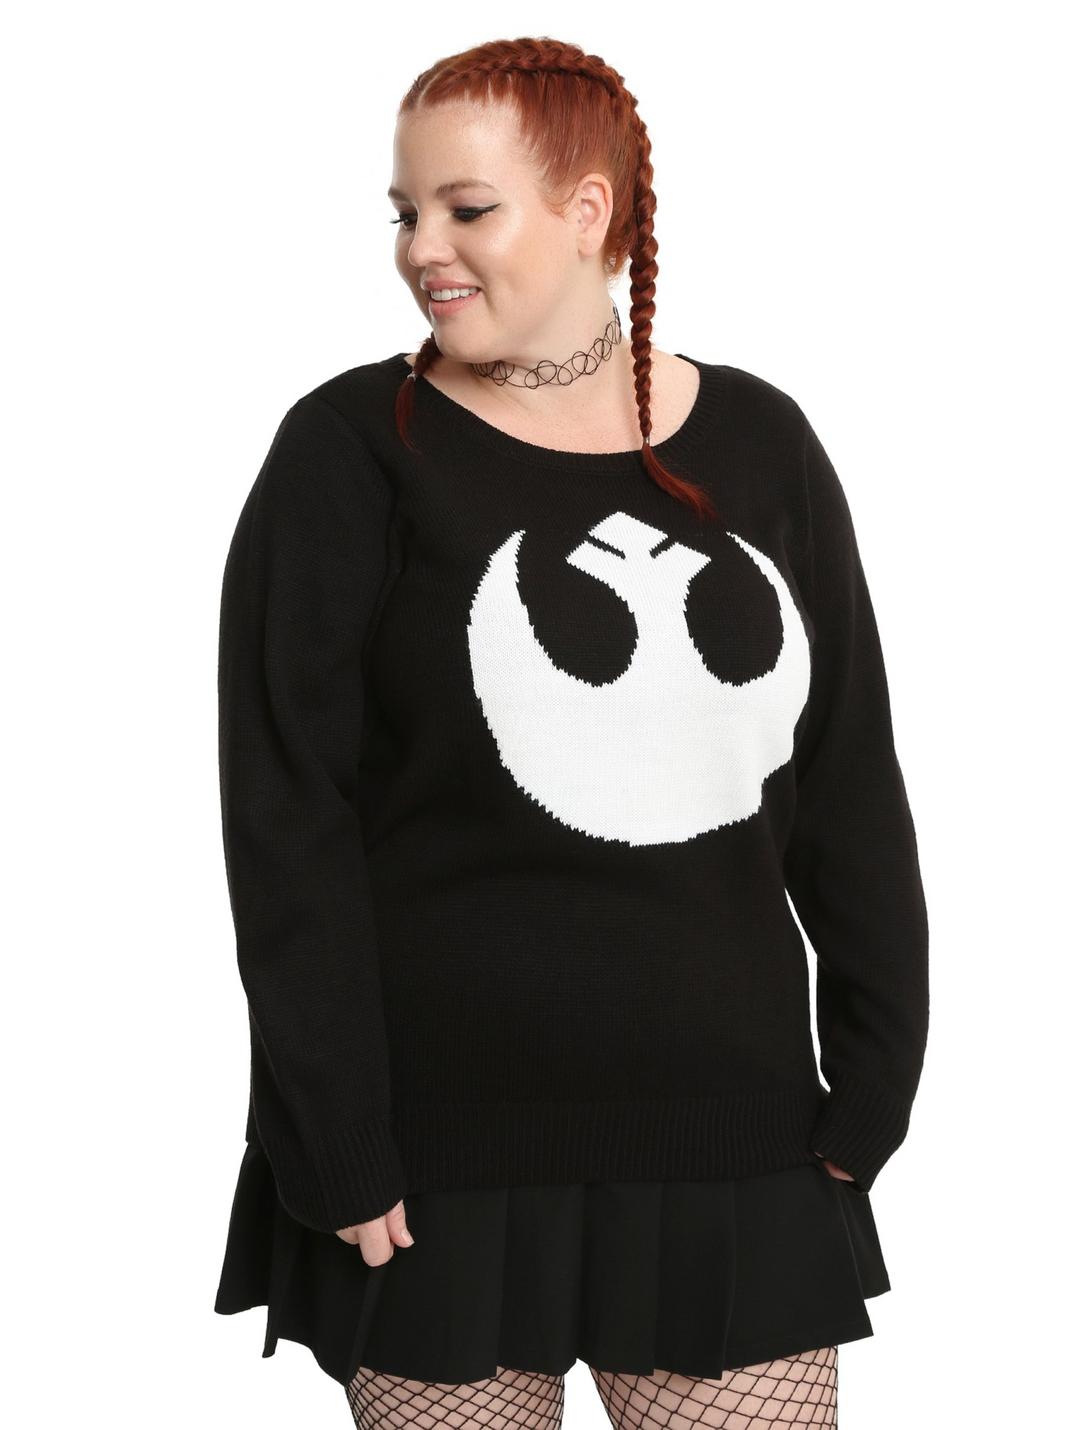 Her Universe Star Wars Rebel Intarsia Sweater Plus Size, BLACK, hi-res